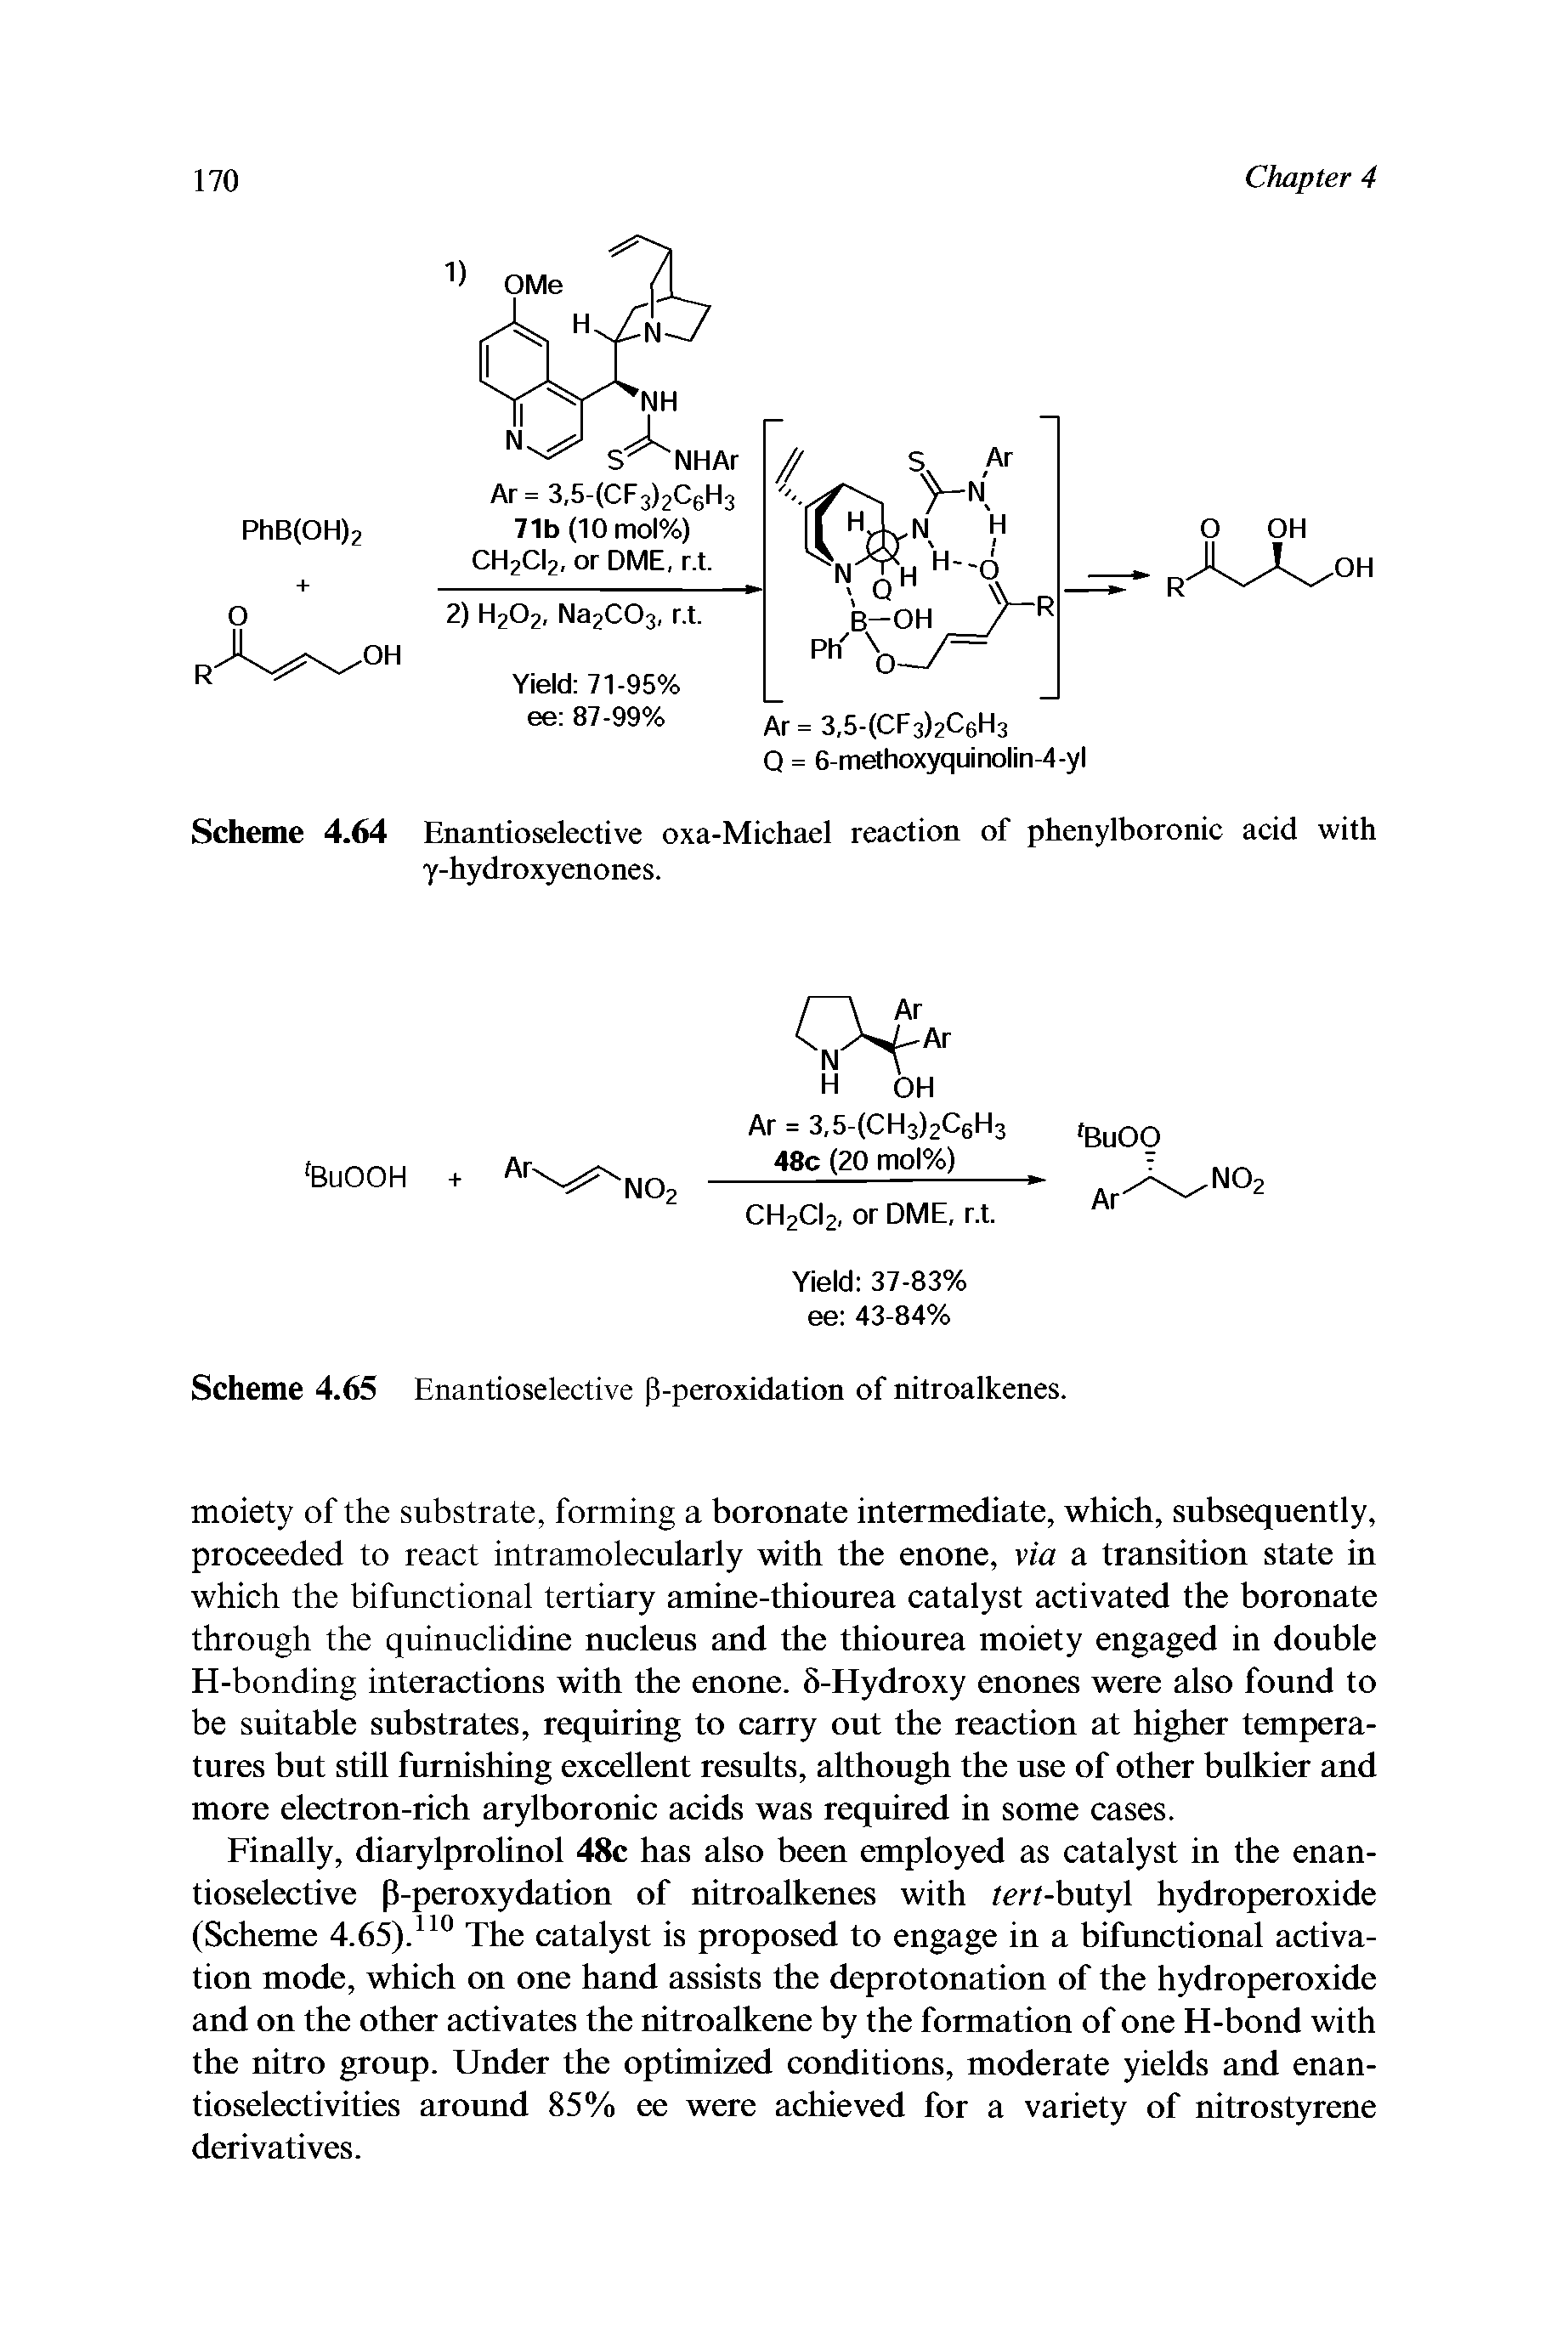 Scheme 4.64 Enantioselective oxa-Michael reaction of phenylboronic acid with y-hydroxyenones.